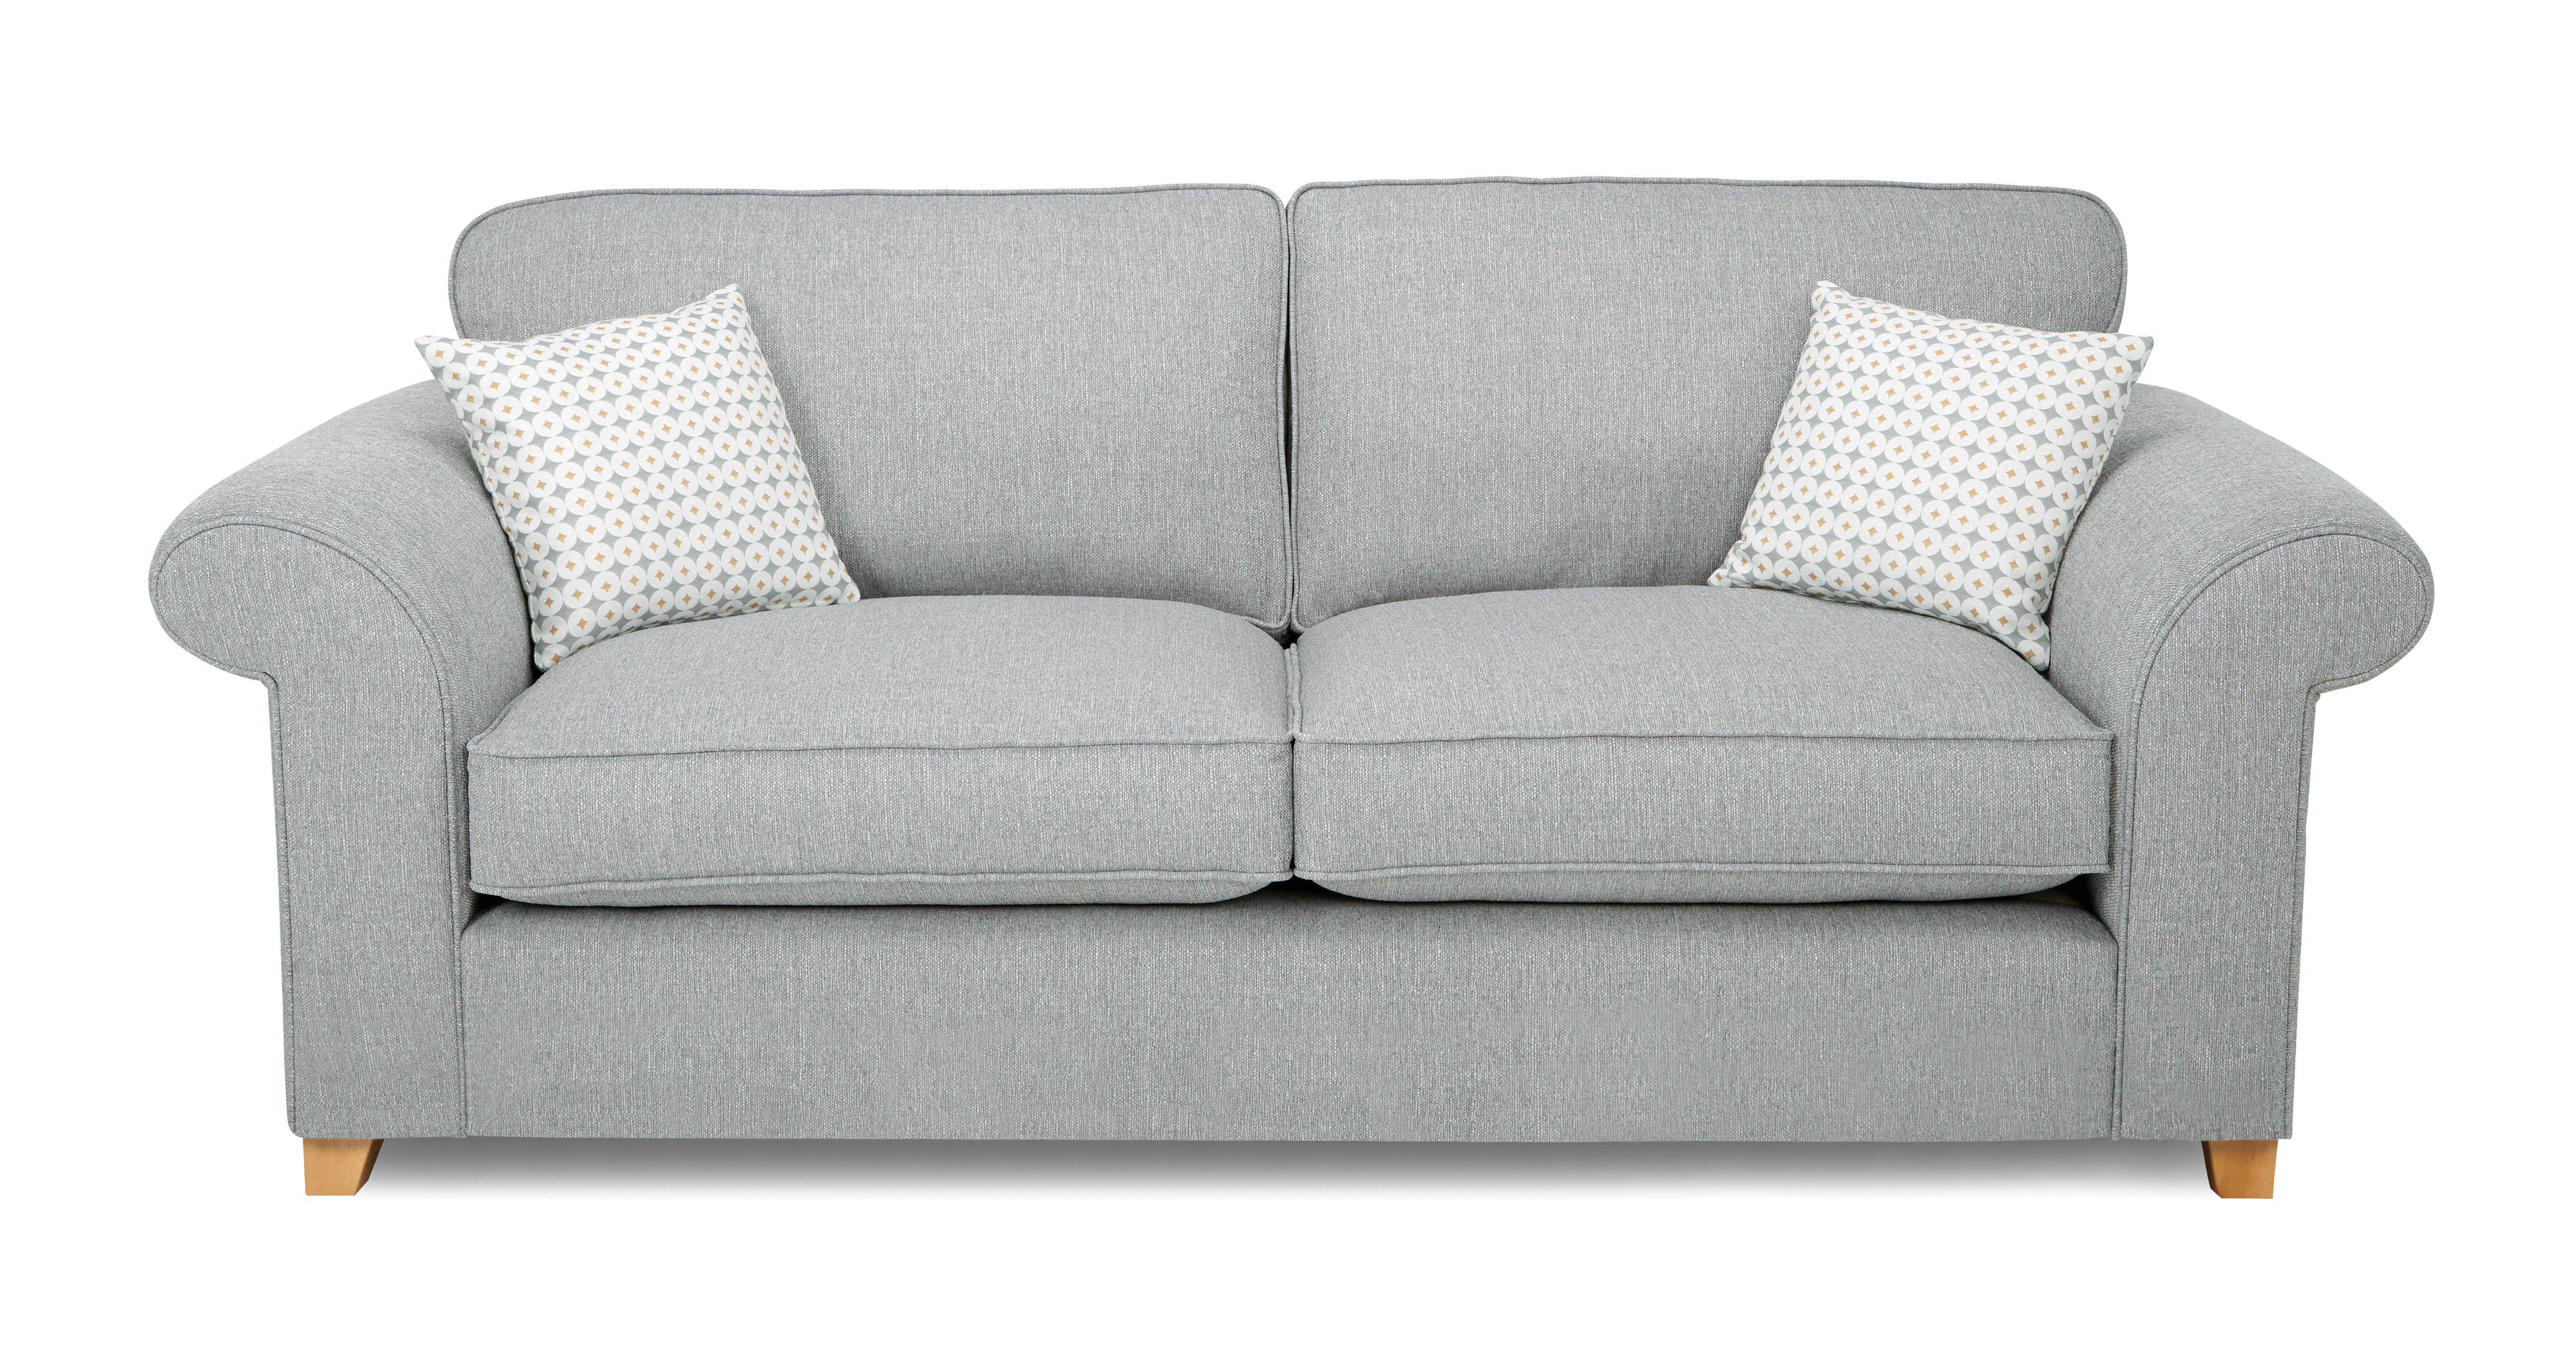 dfs furniture sofa beds